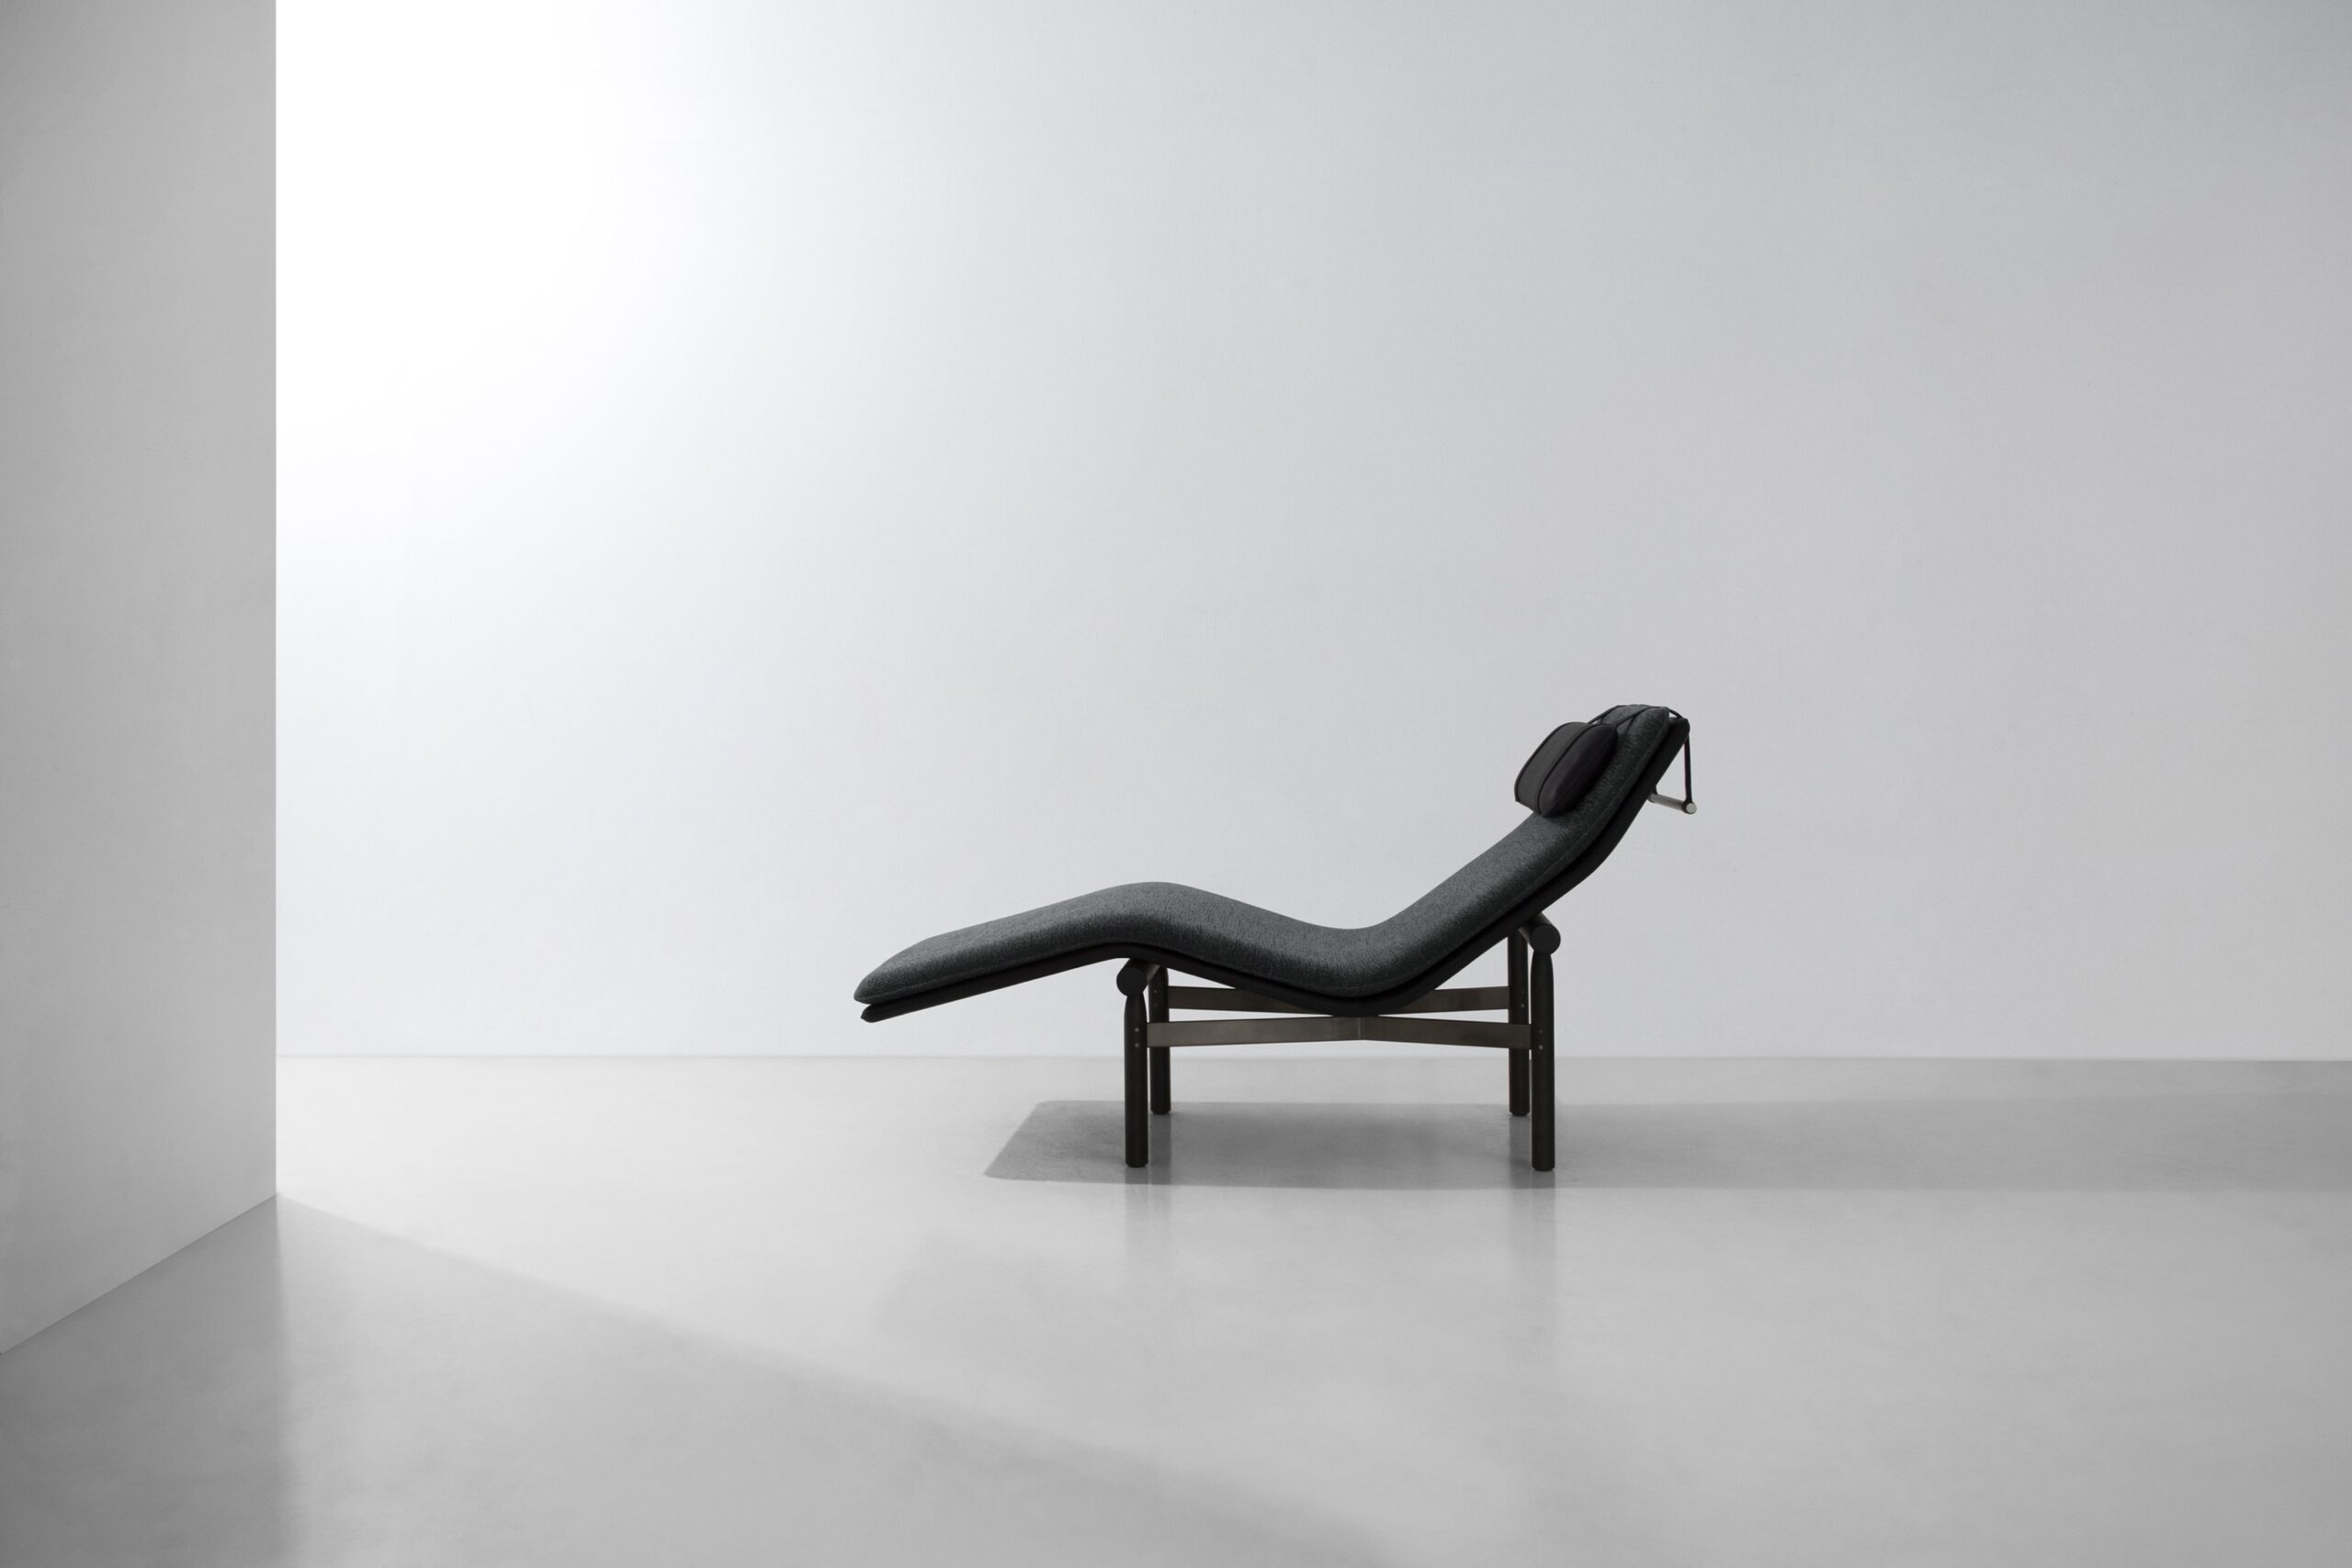 Stilt Chaise Lounge